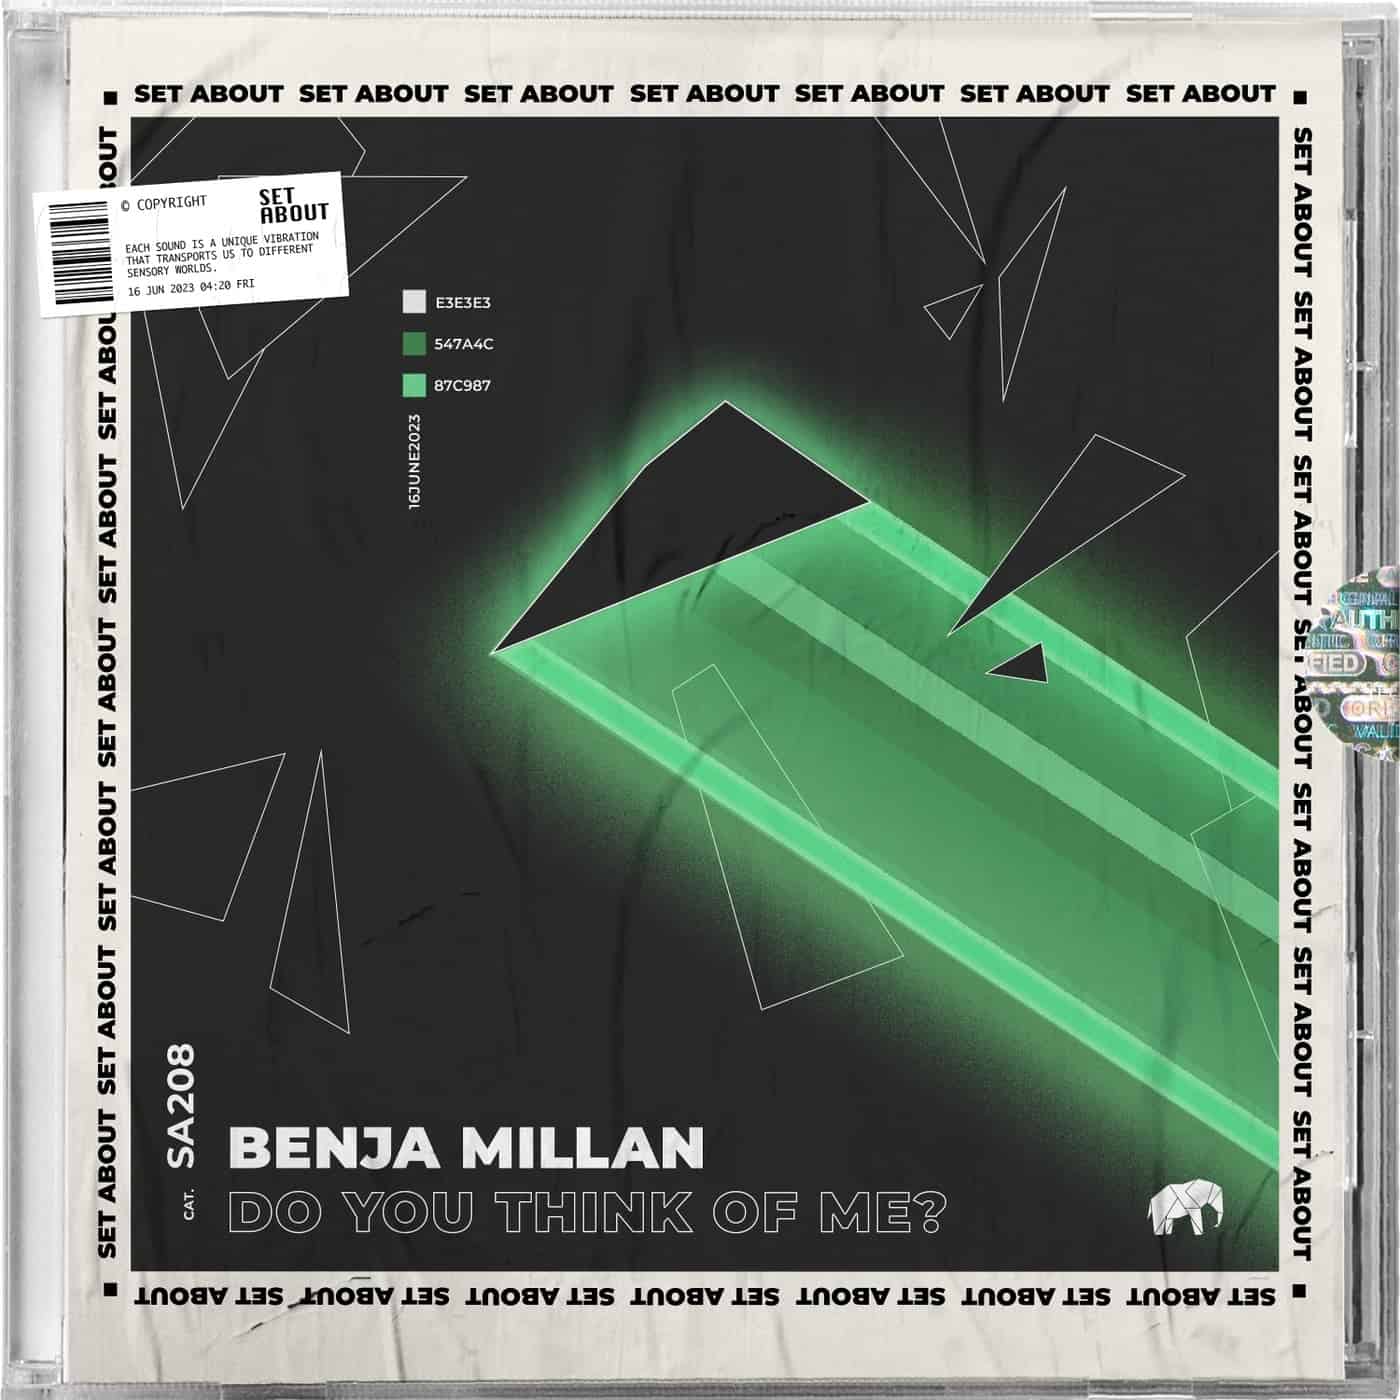 Download benja millan - Do You Think of Me? on Electrobuzz